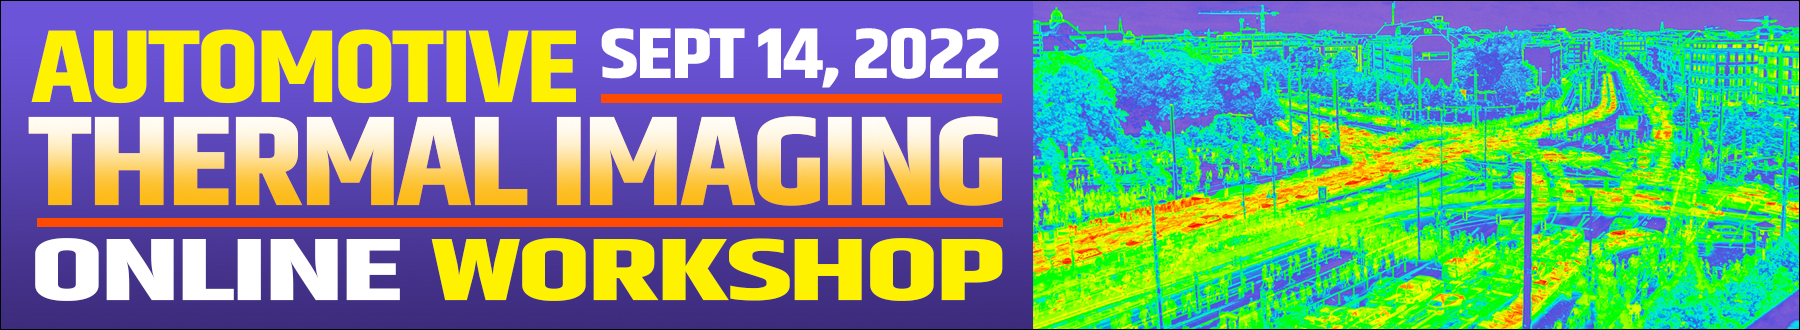 Automotive Thermal Imaging Workshop 2022